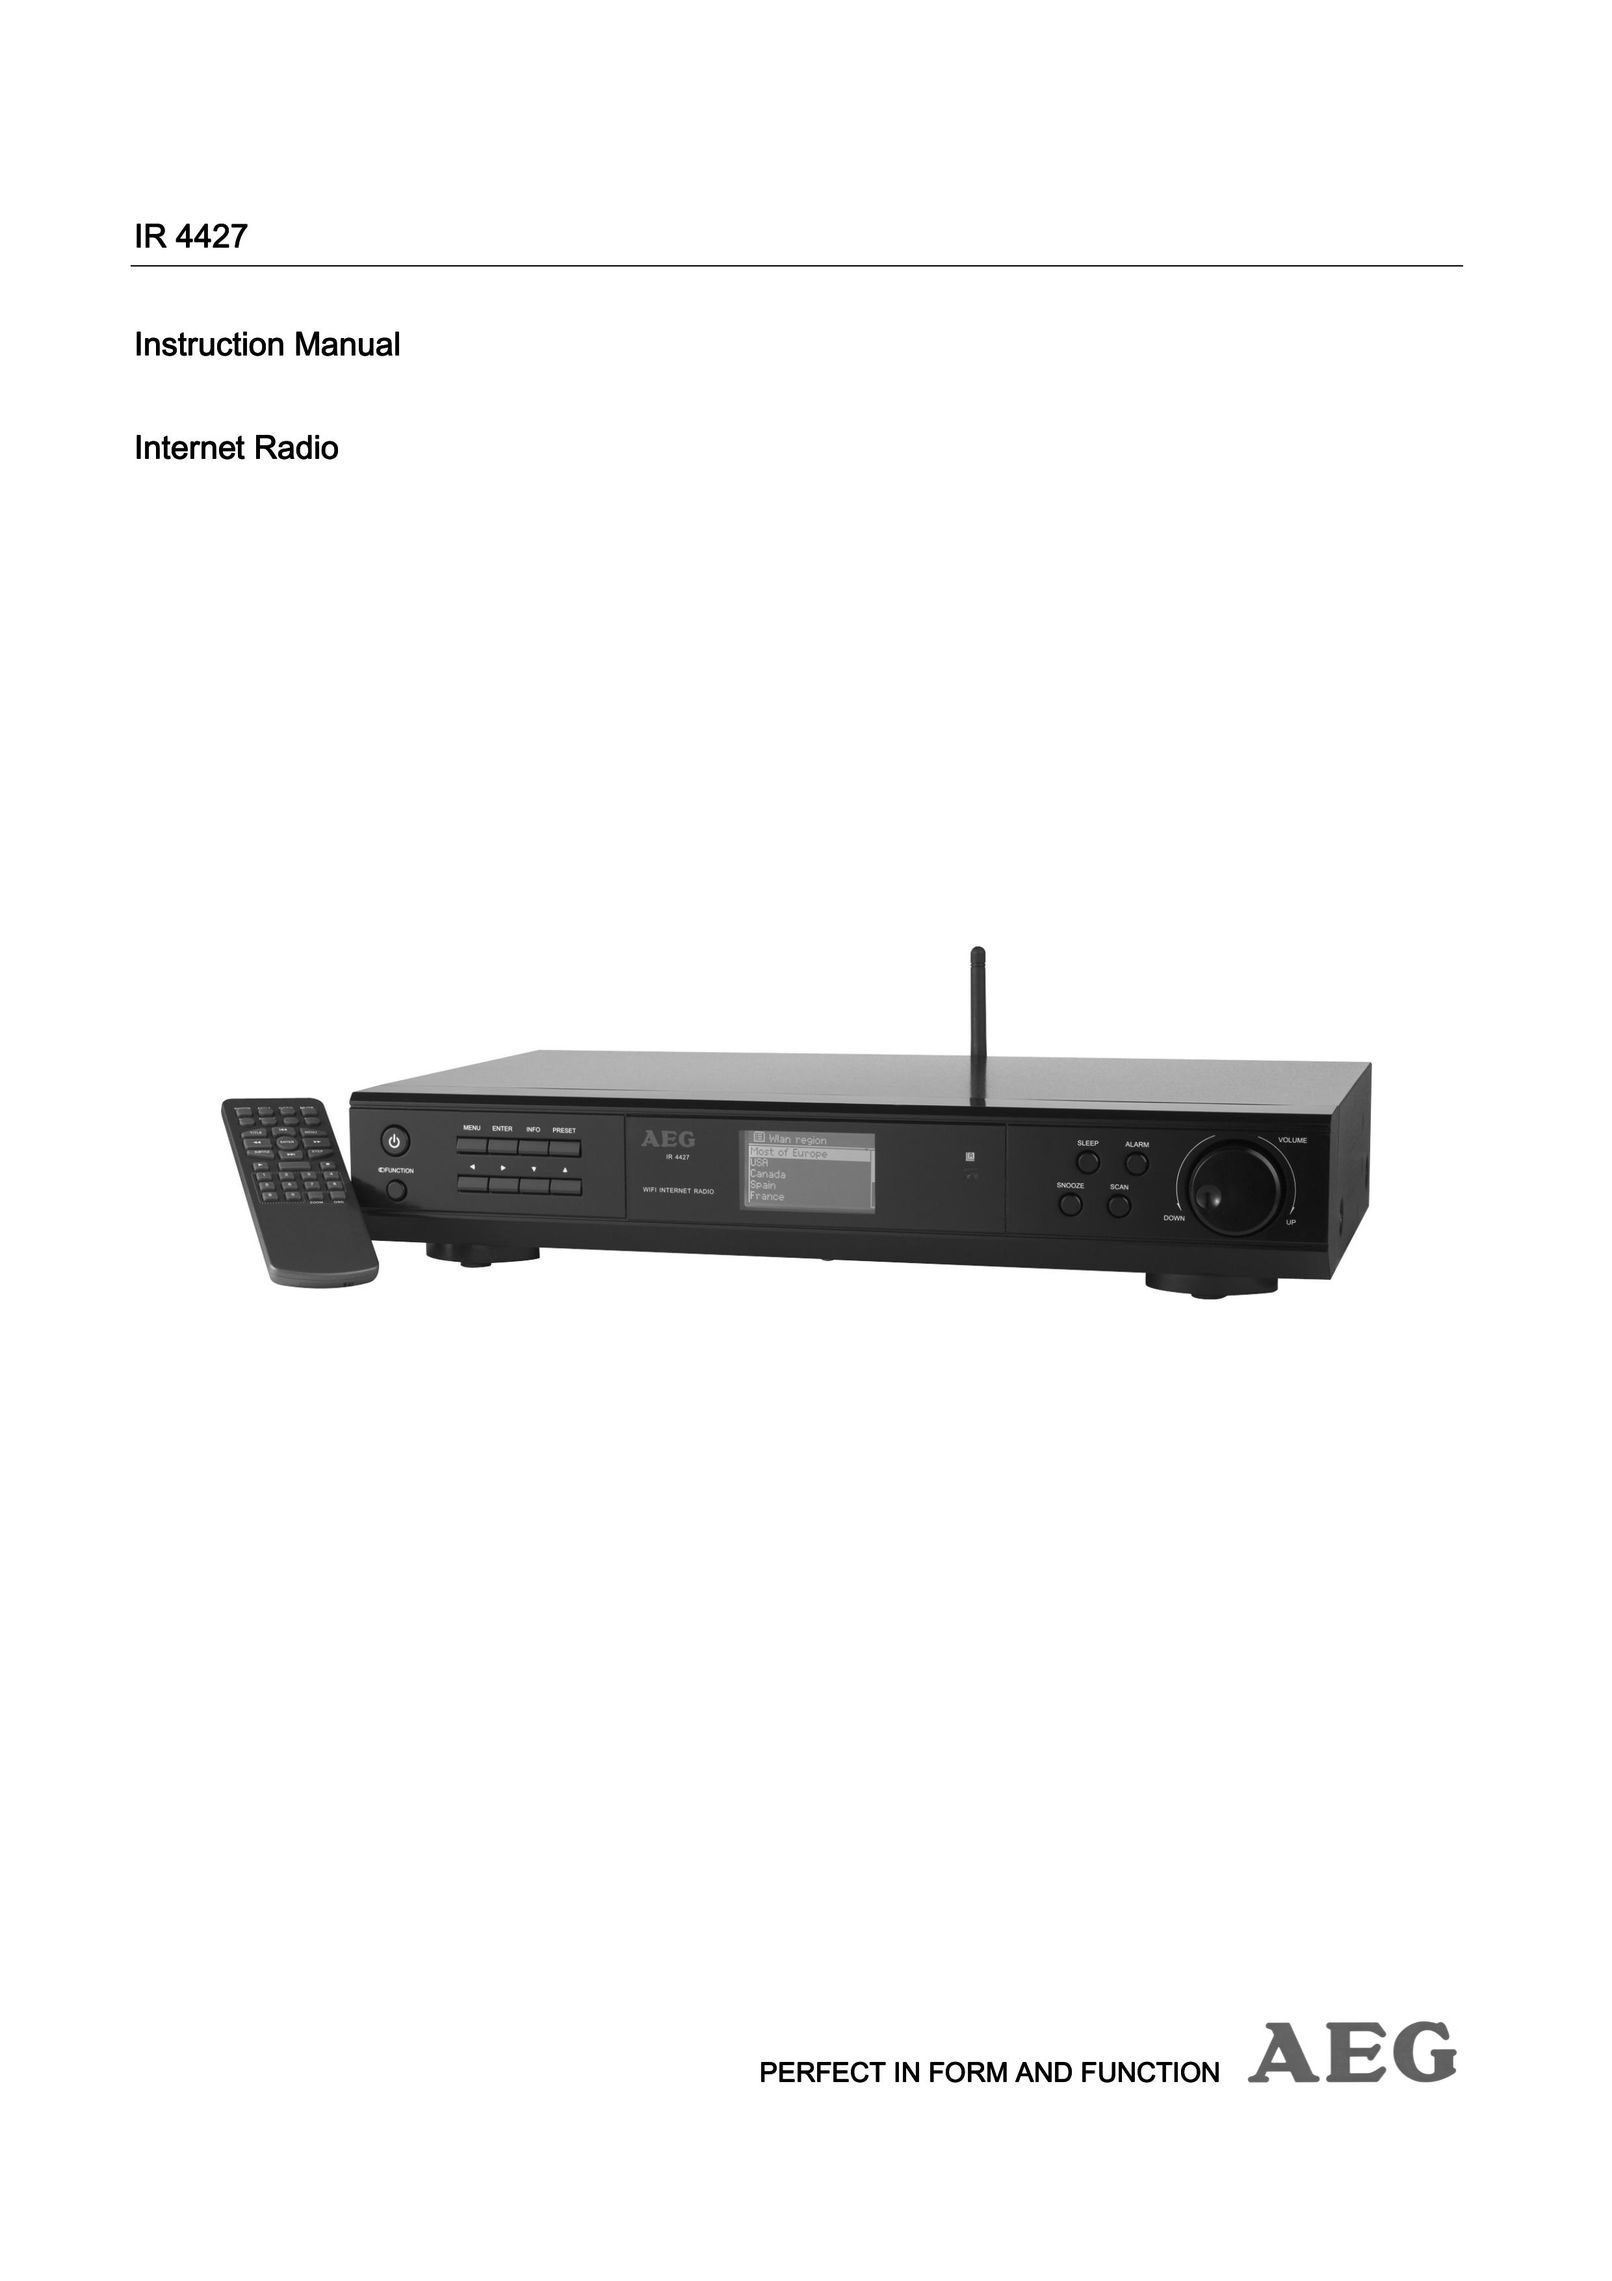 AEG IR 4427 Radio User Manual